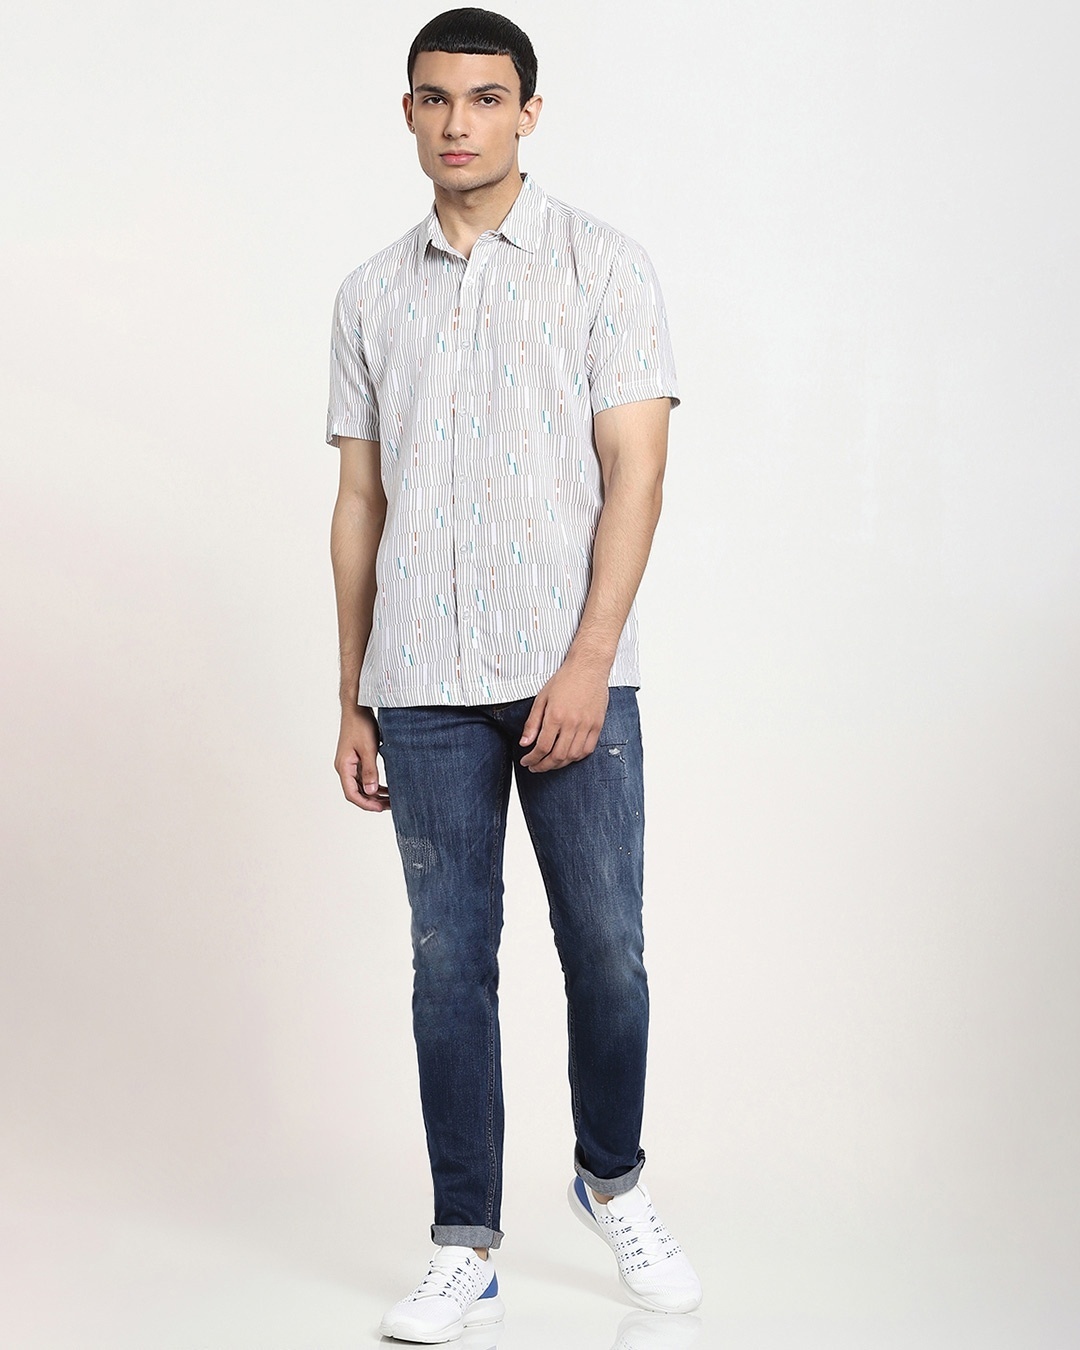 Buy White uneven Line AOP Half Sleeve Shirt for Men white Online at ...